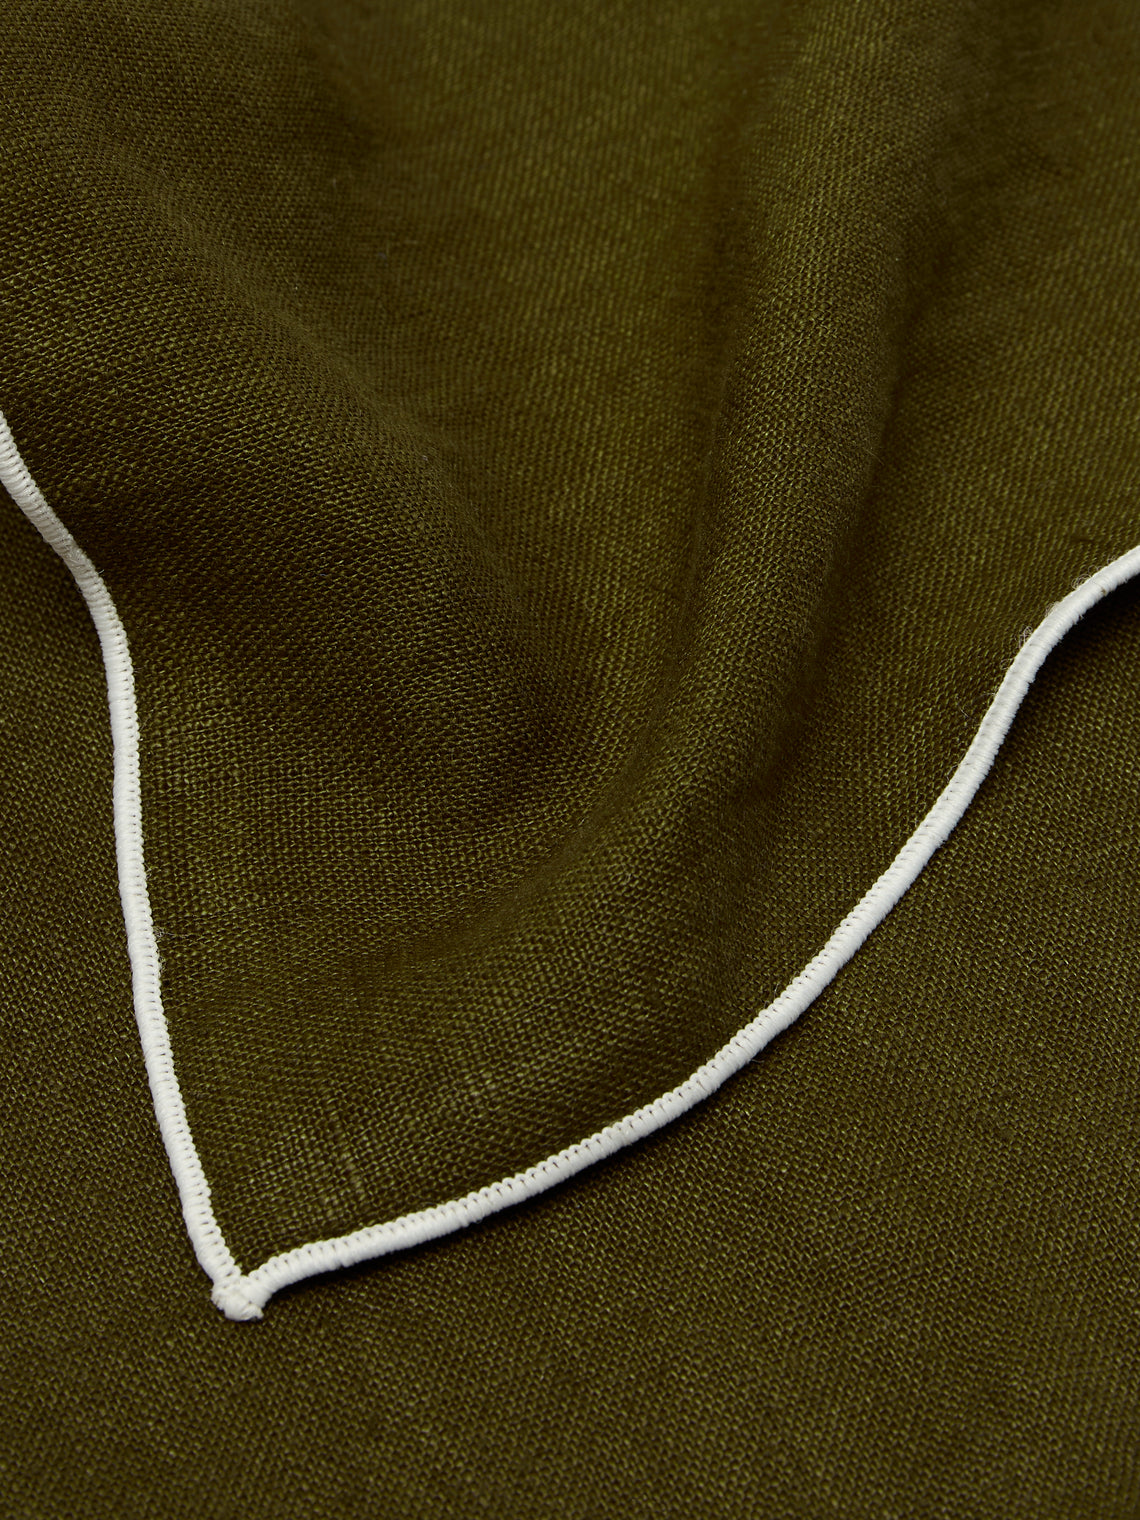 Madre Linen - Hand-Dyed Linen Contrast-Edge Napkins (Set of 4) - Green - ABASK